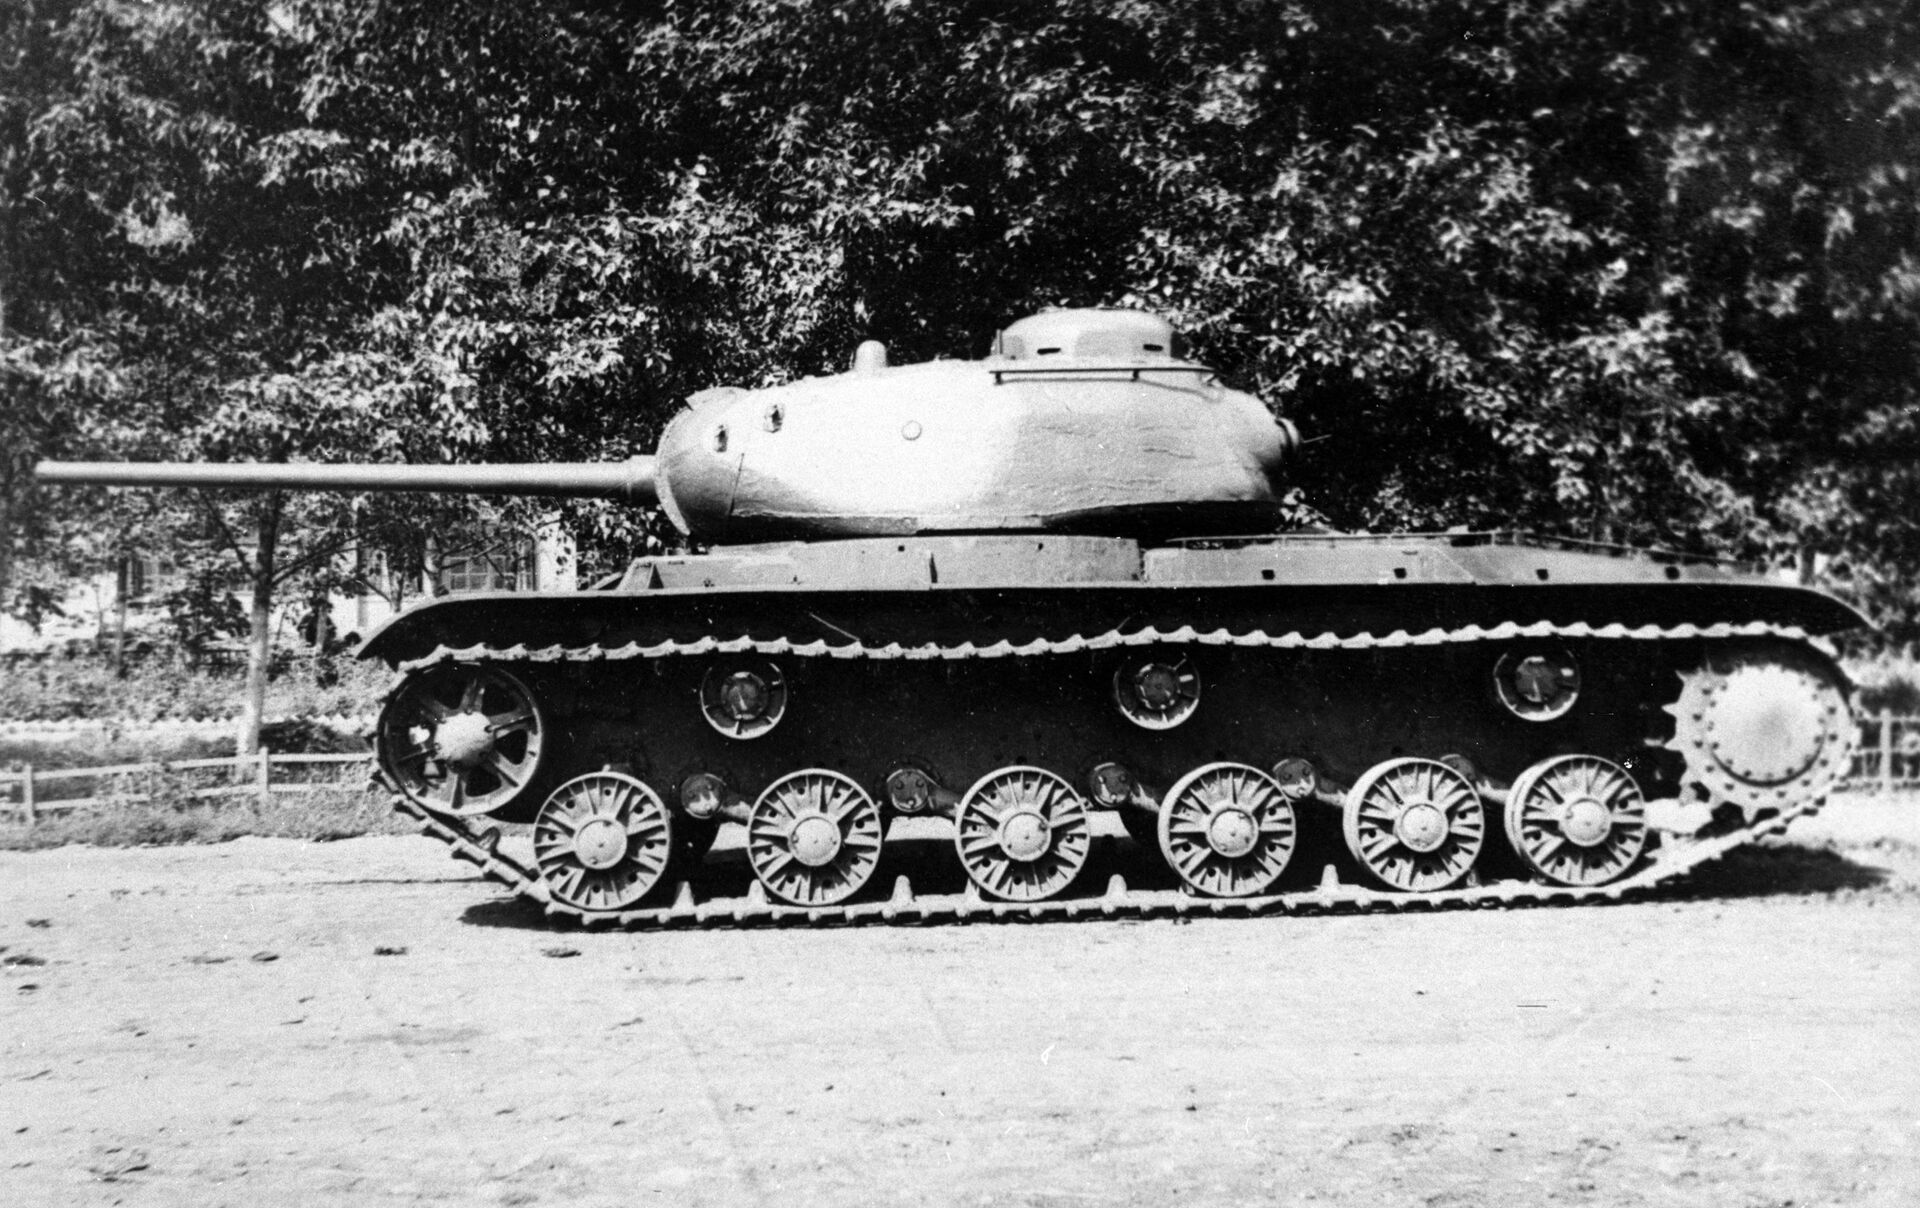 Тяжелый танк кв-85